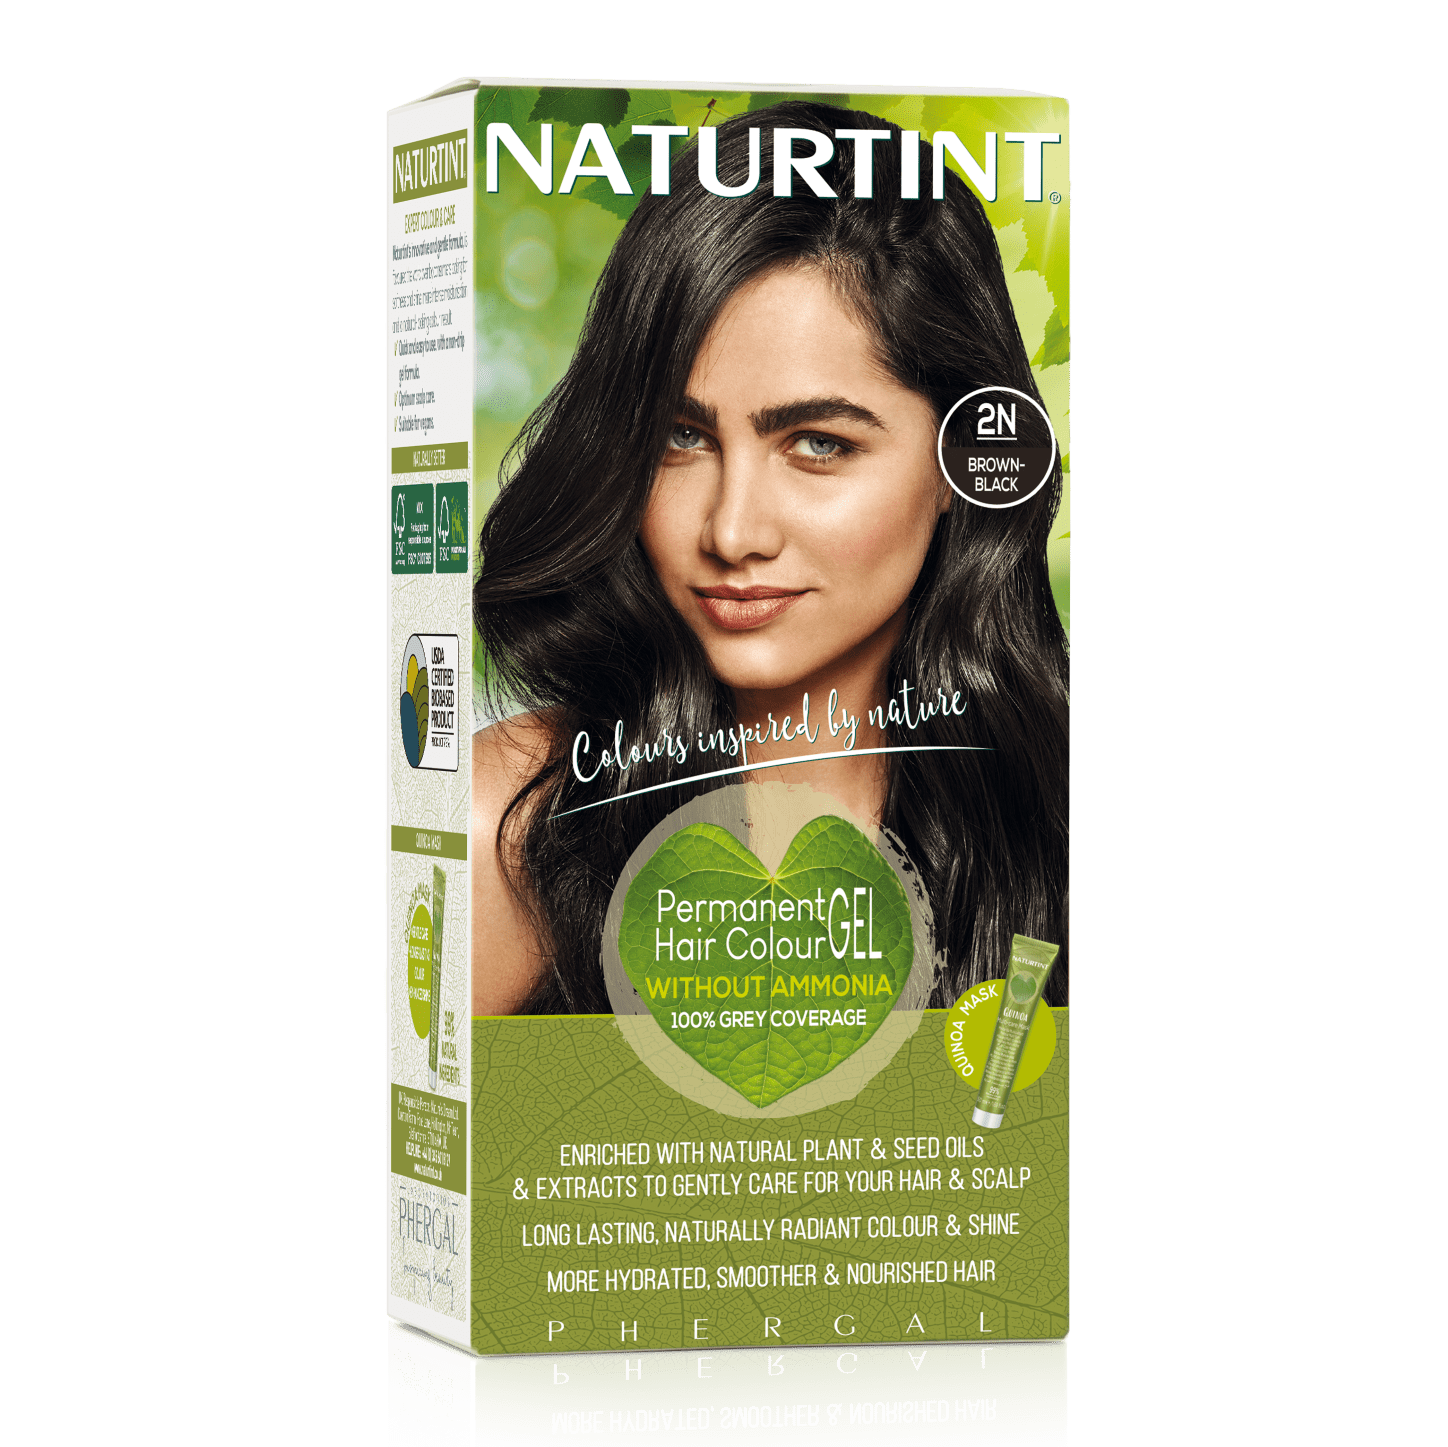 Naturtint Permanent Hair Colour Gel 2N Brown-Black - 170ml - Naturtint